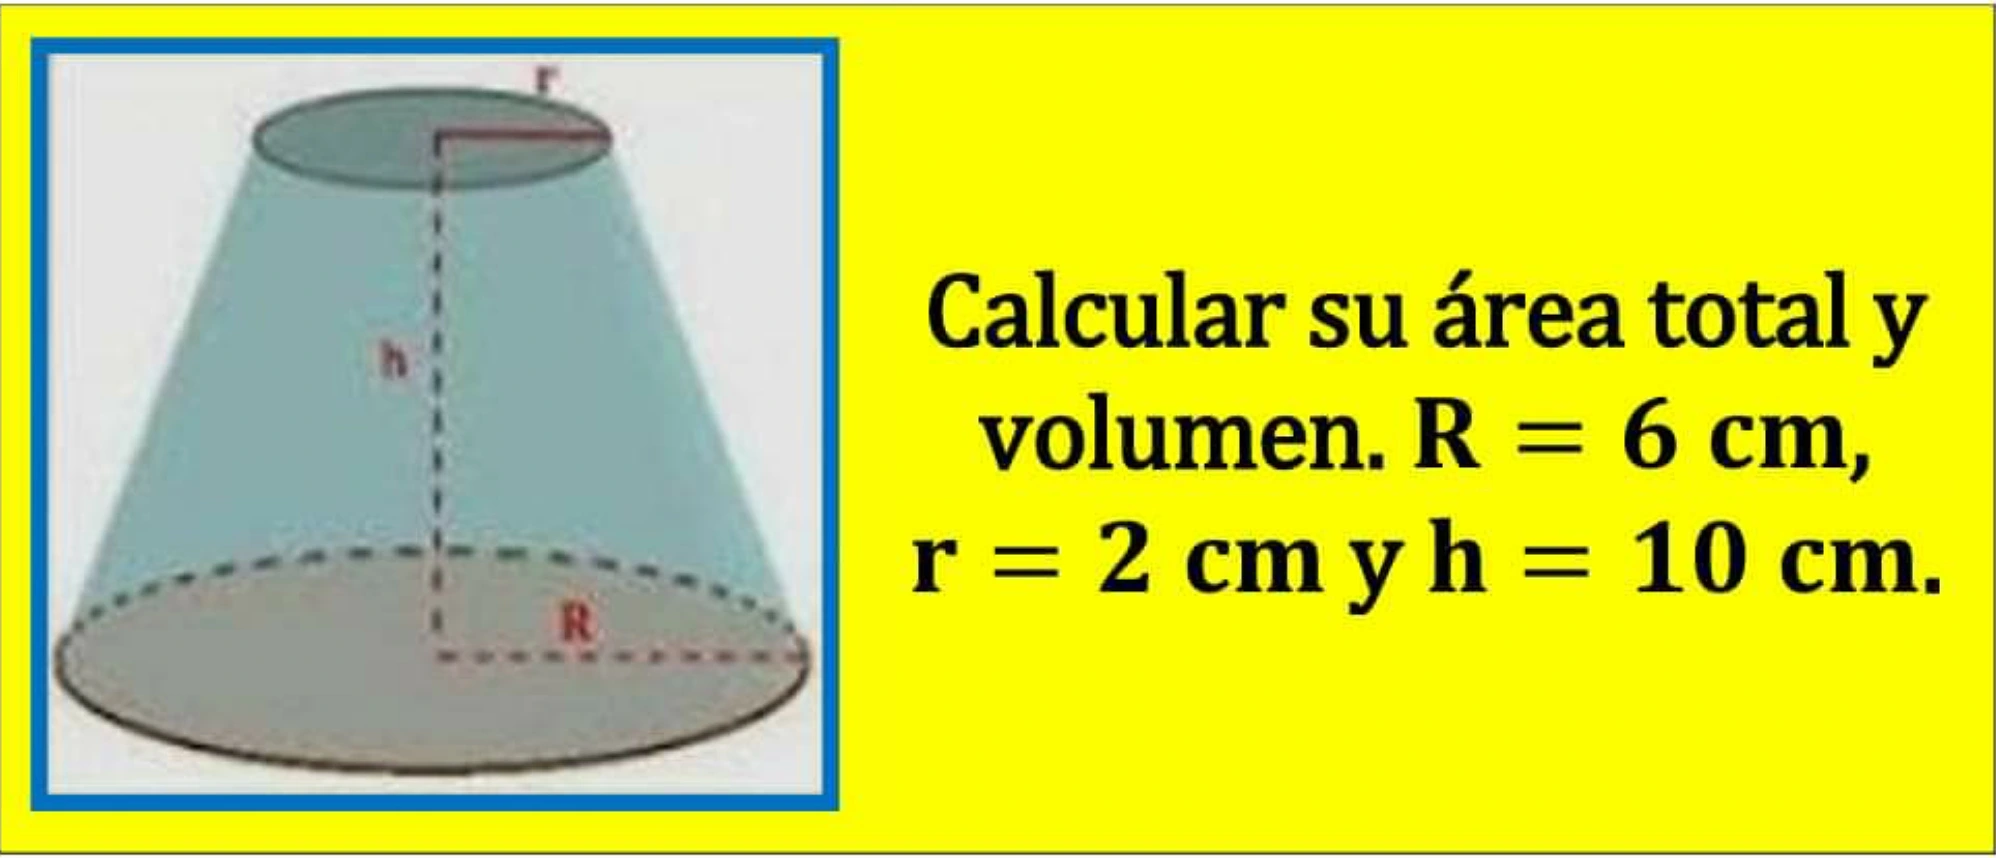 Calcula el área total y el volumen del tronco de cono | profe.mates.jac -  blog para tod@s (Mates)